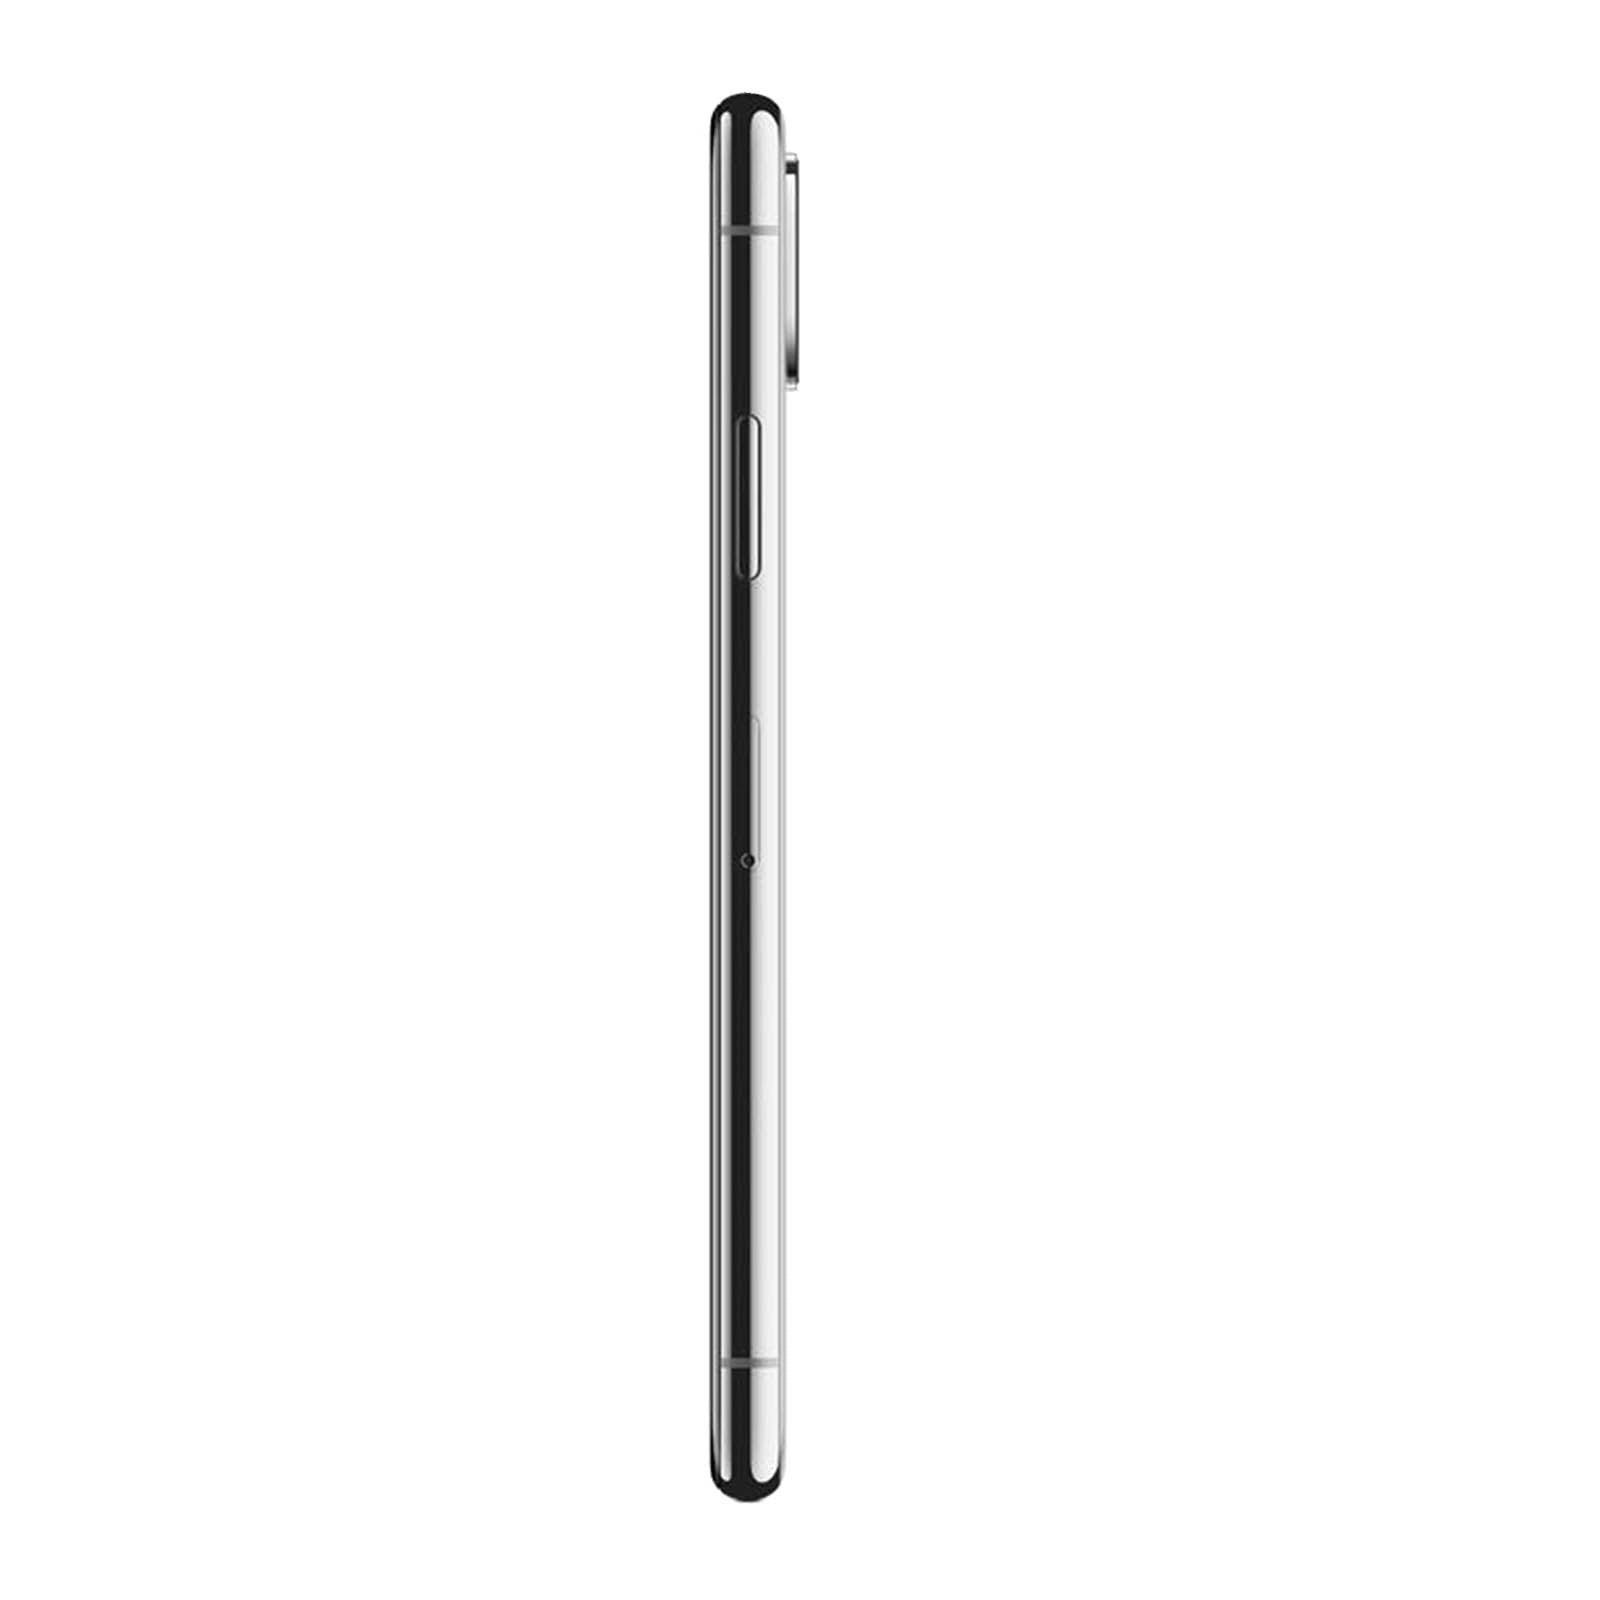 Apple iPhone XS 64GB Silver Good - Verizon